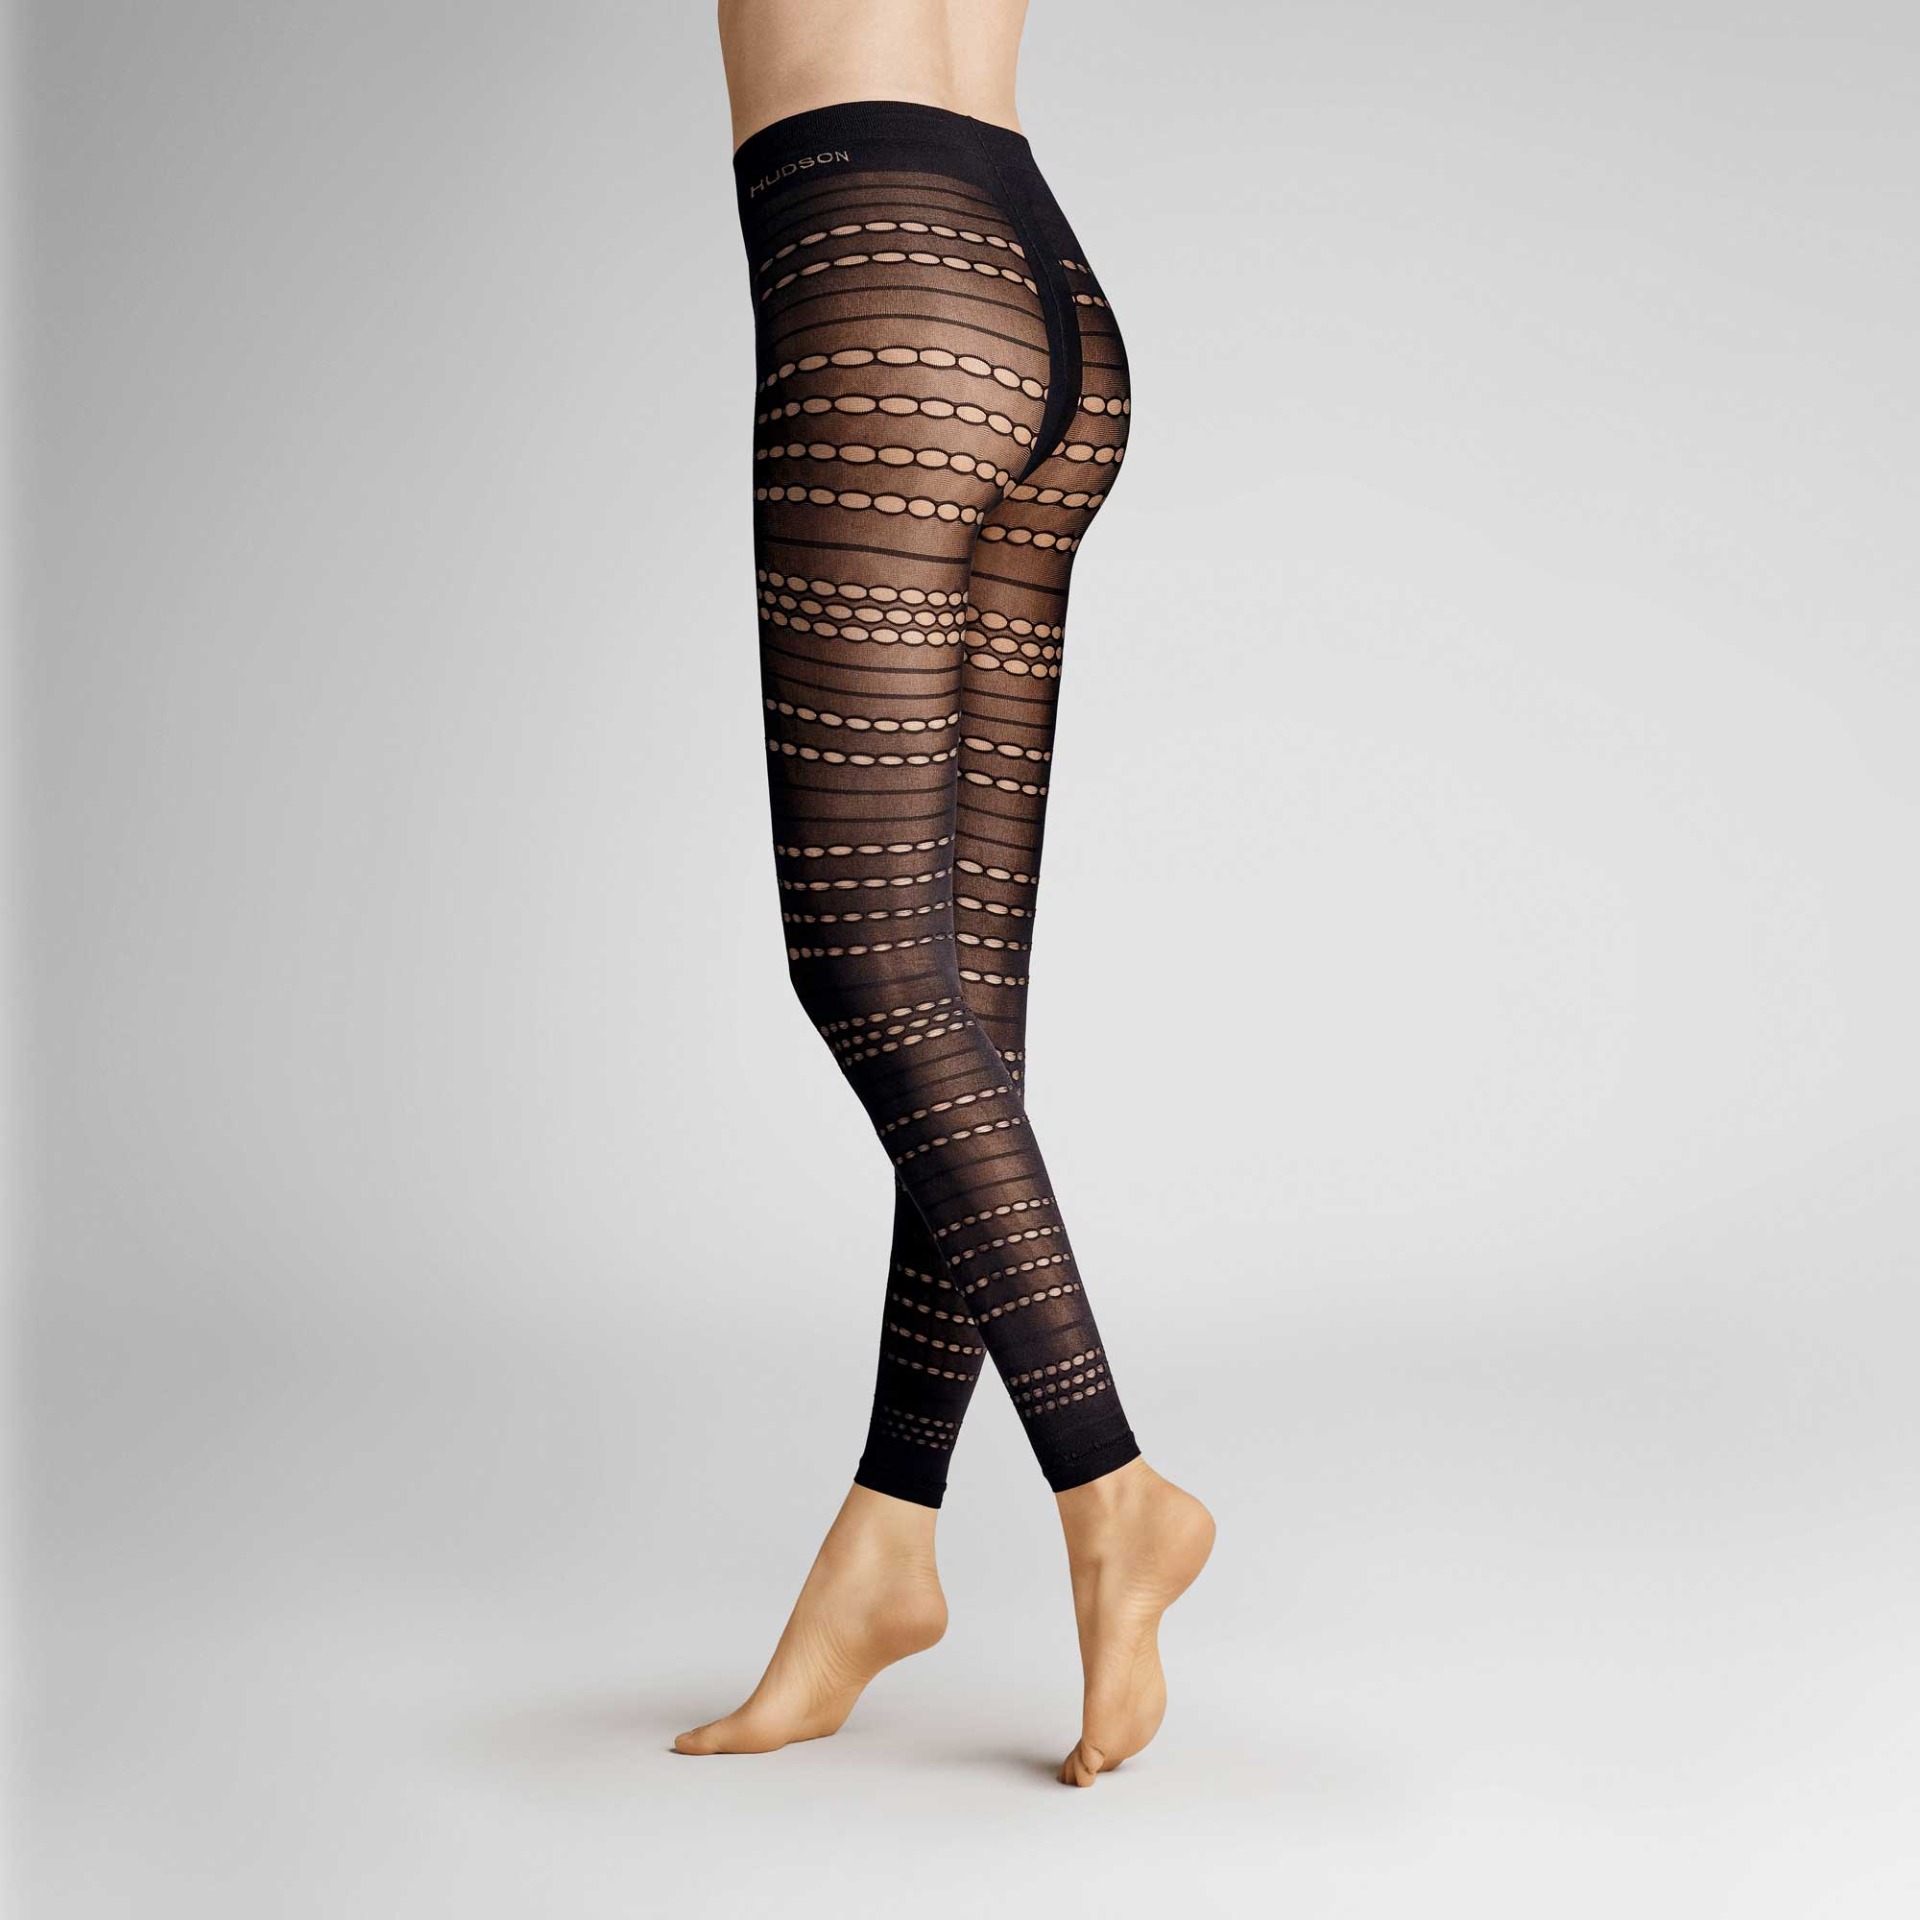 HUDSON Damen FUZZY -  40/42 - Damen Leggings mit transparenter Musterung - Black (Schwarz)